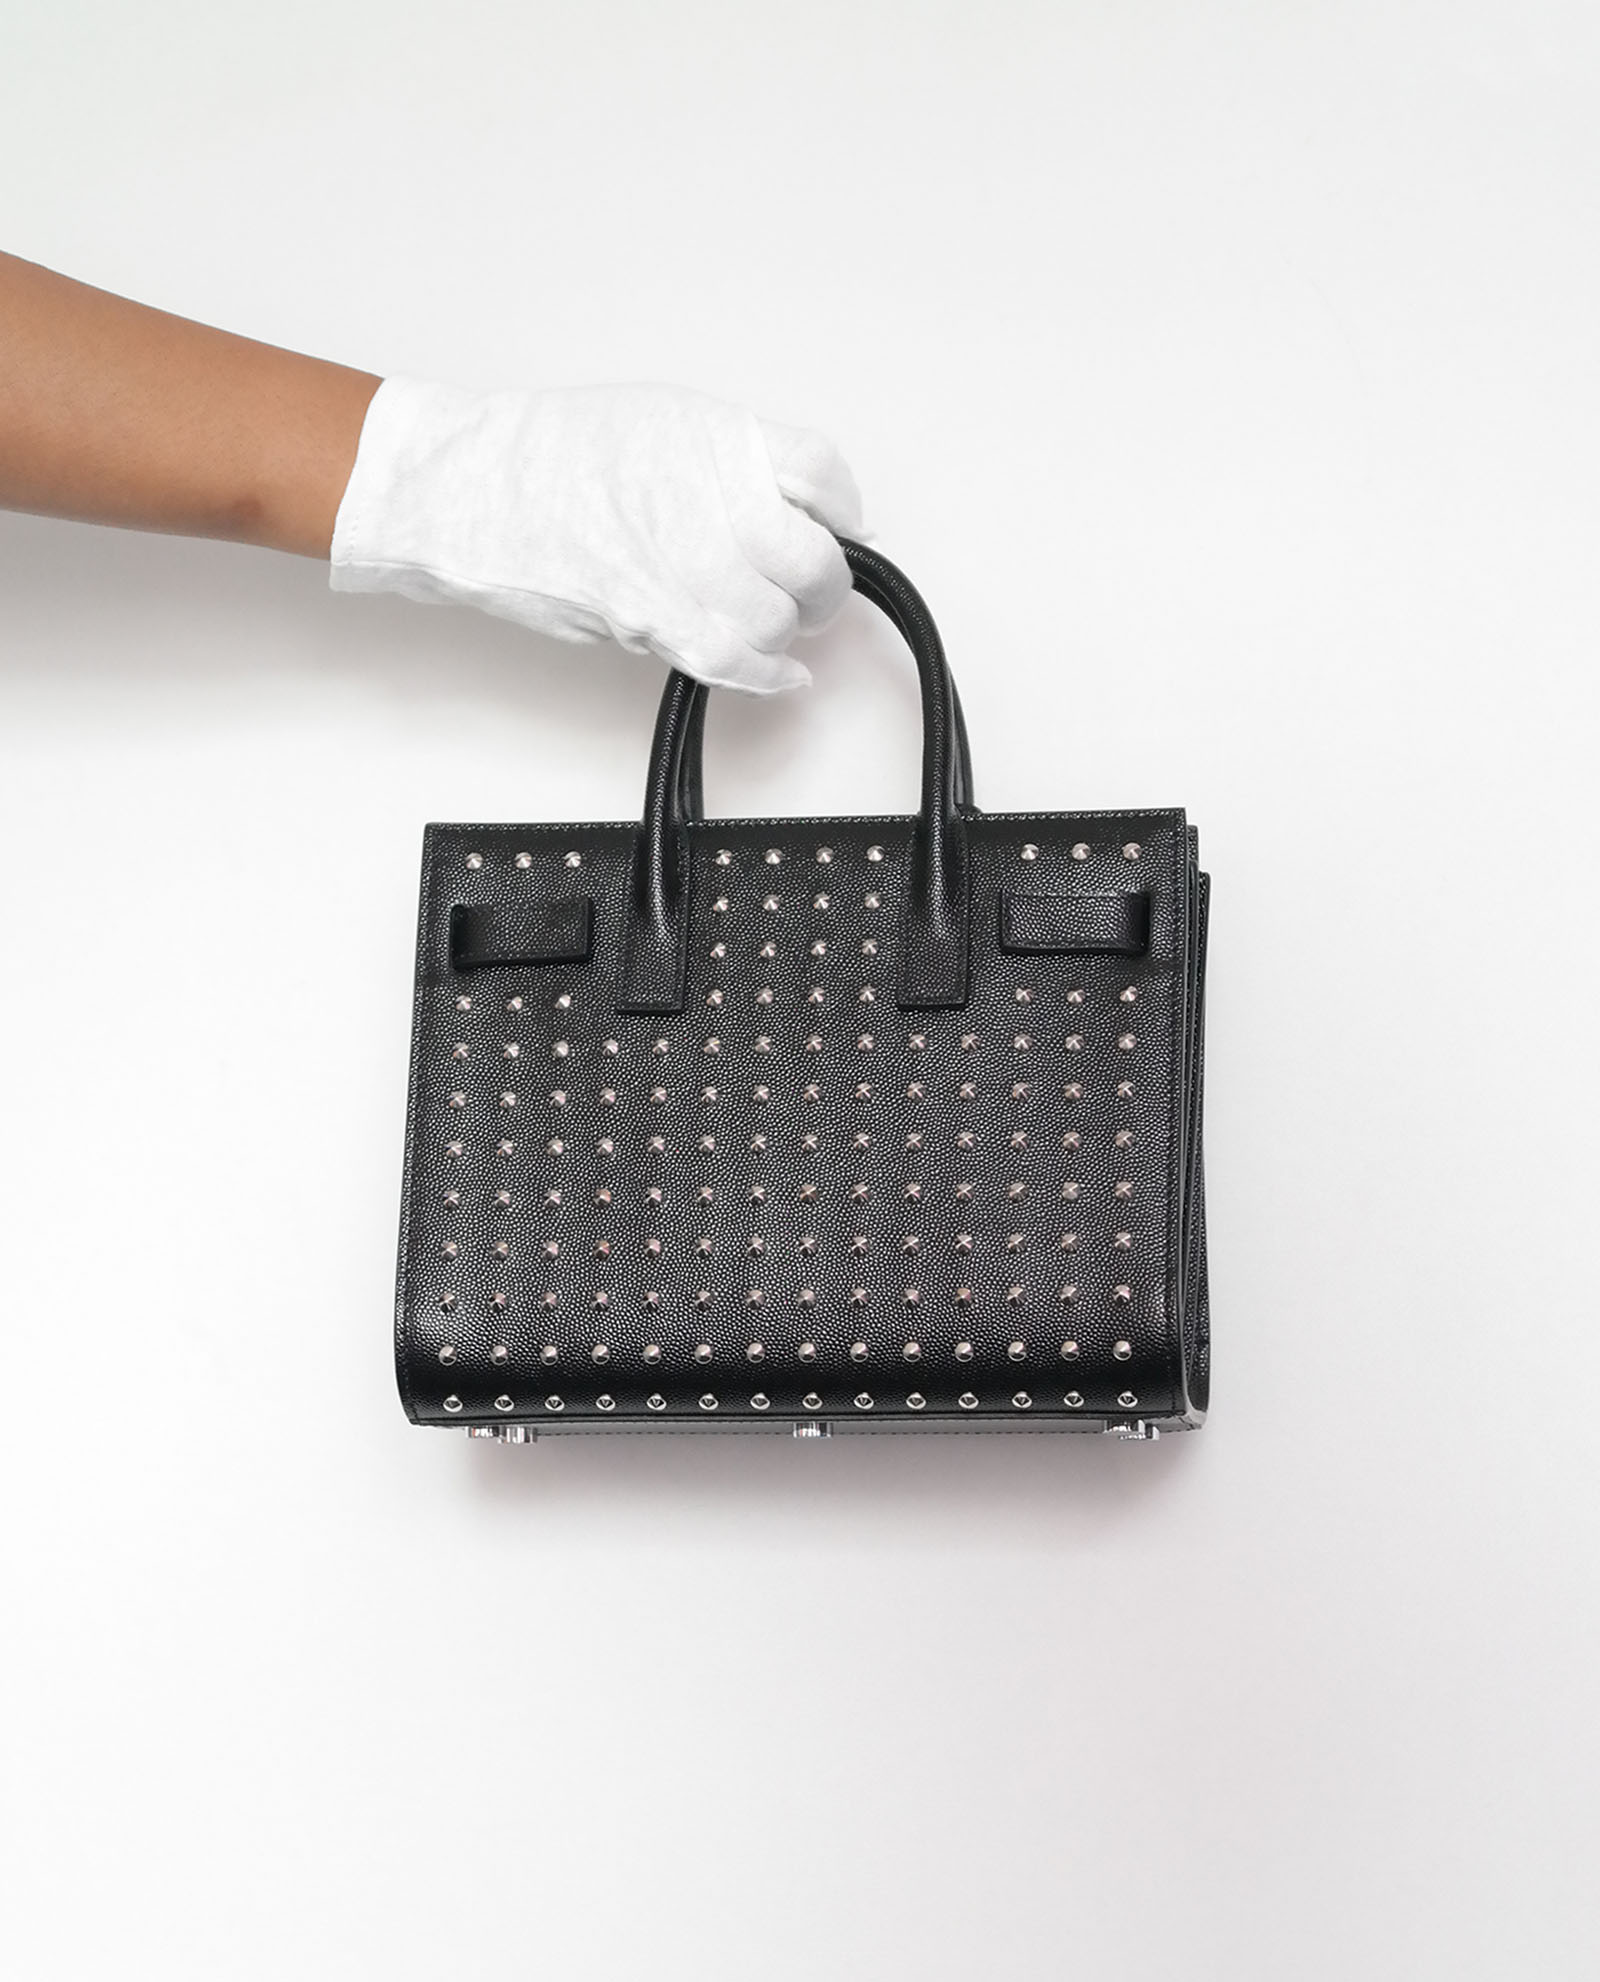 Luxury Designer Bag Investment Series: St Laurent Sac de Jour YSL Bag  Review - History, Prices 2020 • Save. Spend. Splurge.